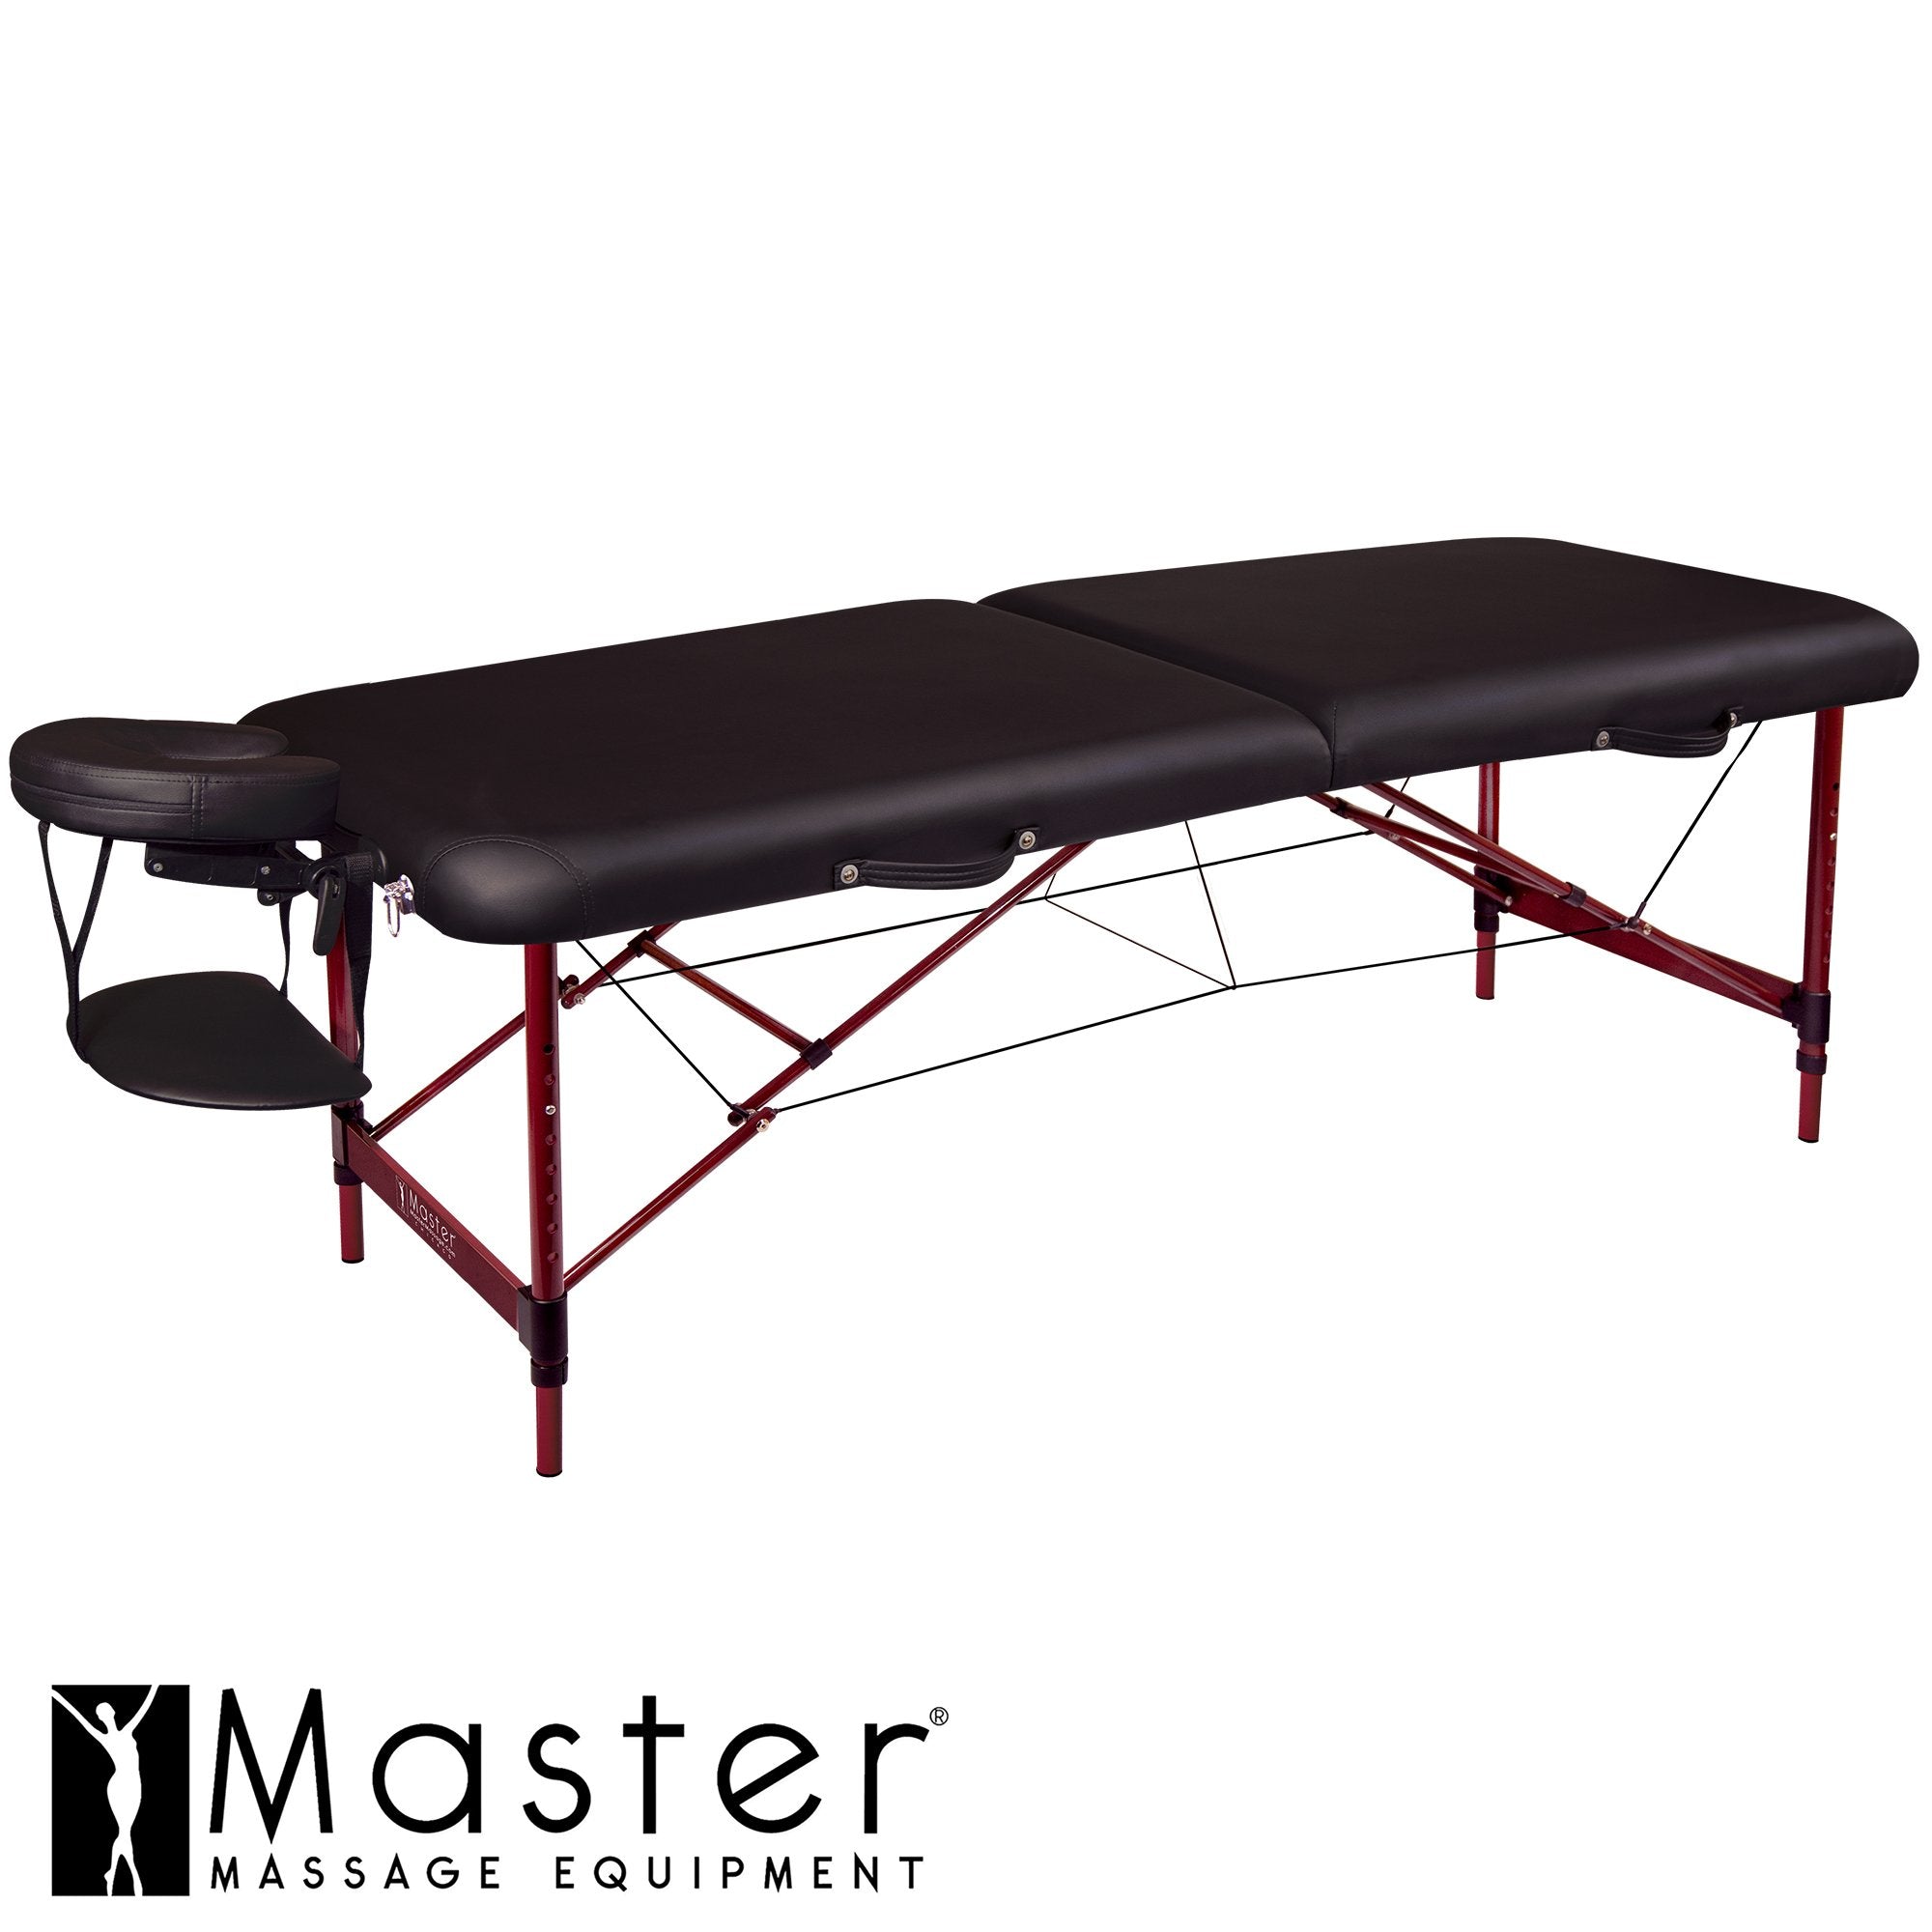 Master Massage Equipment